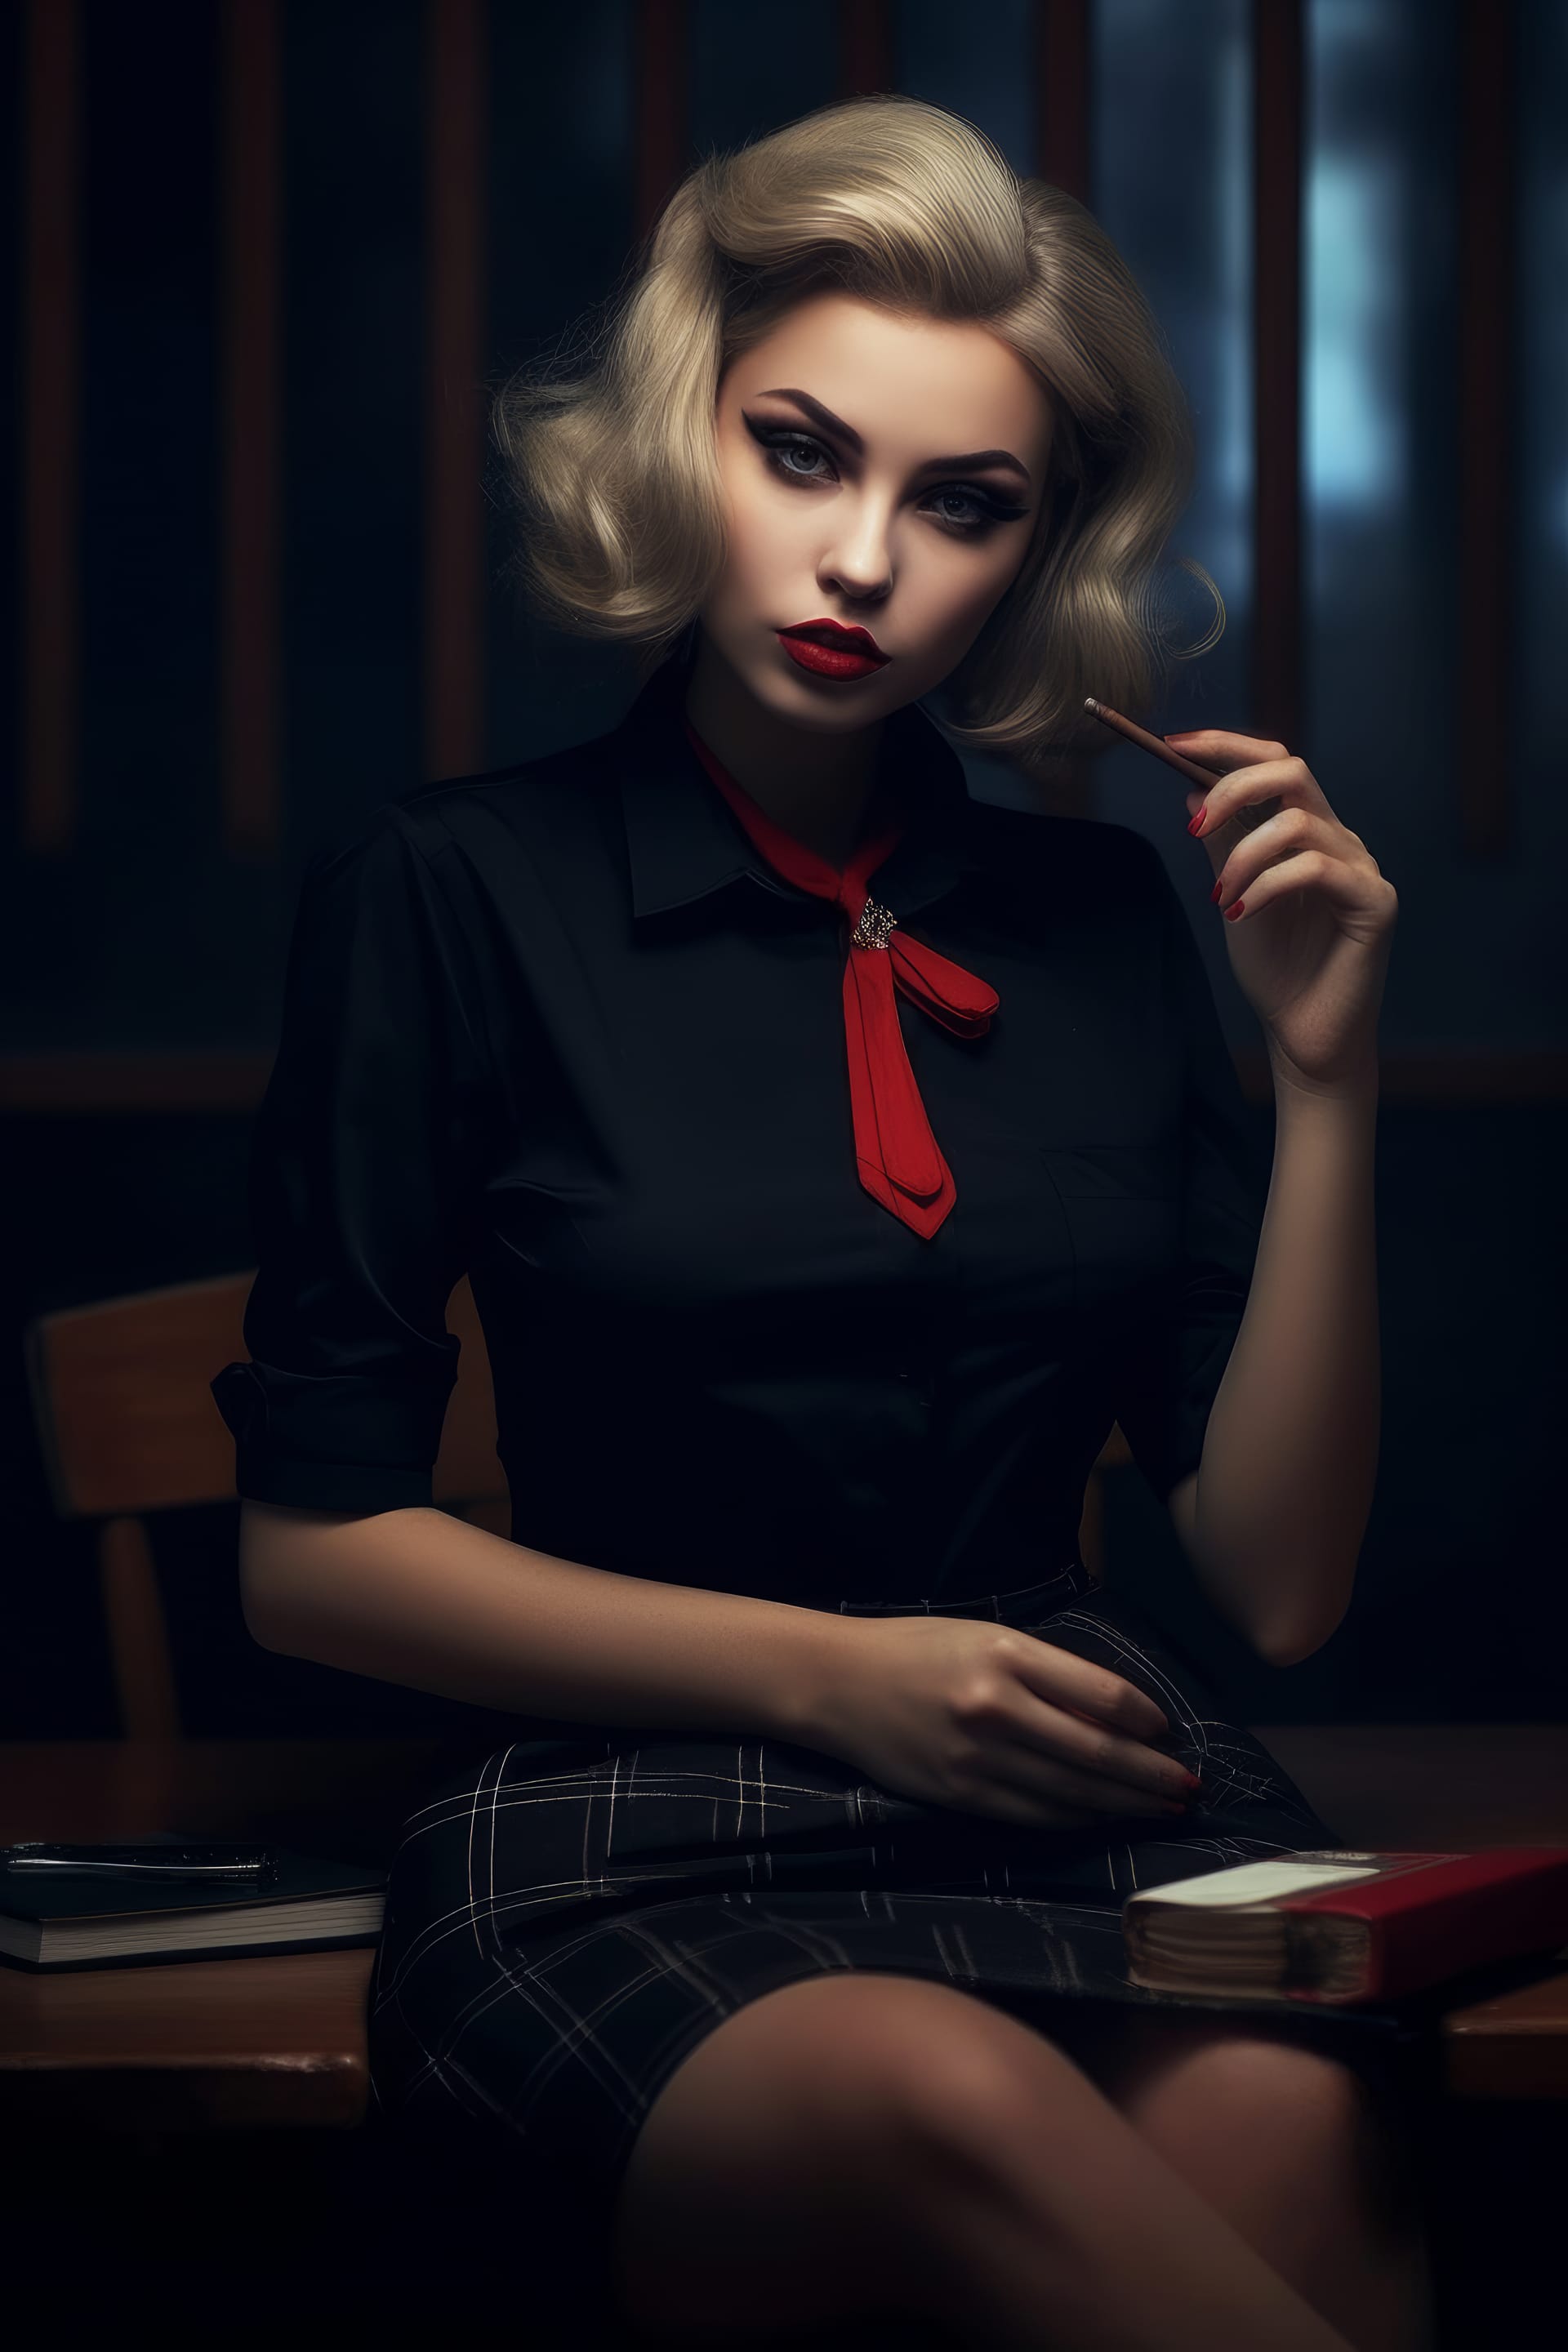 Woman black shirt red tie evocative artwork portraiture